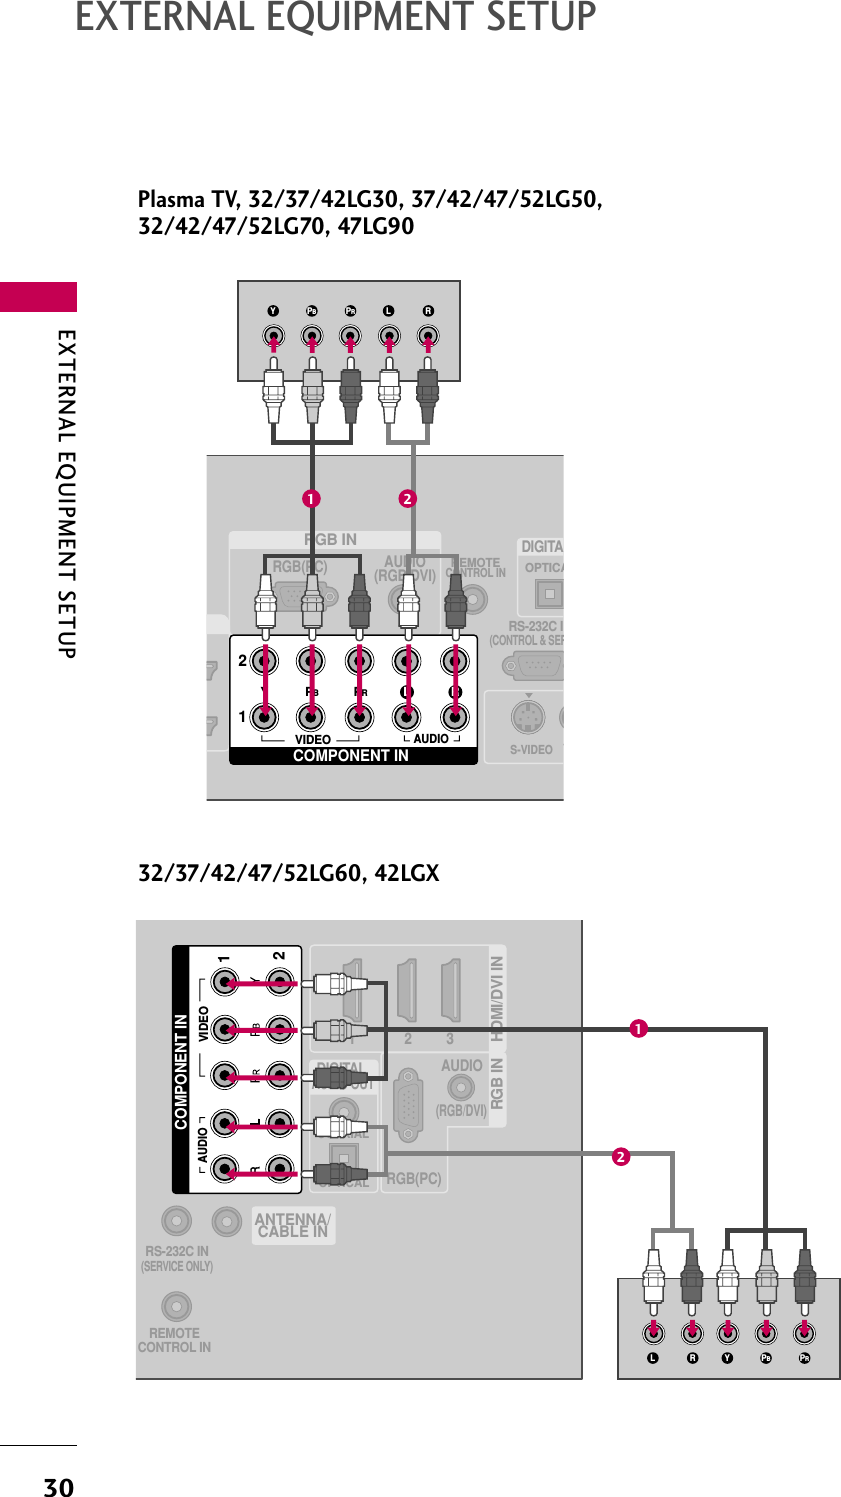 EXTERNAL EQUIPMENT SETUP30EXTERNAL EQUIPMENT SETUPRGB INAUDIO(RGB/DVI)RGB(PC)REMOTECONTROL INRS-232C I(CONTROL &amp; SEROPTICADIGITAVS-VIDEOCOMPONENT IN12VIDEOLYPBPRRAUDIOY L RPBPR1 2(RGB/DVI)AUDIORGB(PC)REMOTECONTROL INRS-232C IN(SERVICE ONLY)OPTICALCOAXIALDIGITAL AUDIO OUT1 2 3HDMI/DVI IN RGB IN ANTENNA/CABLE INCOMPONENT IN21VIDEOAUDIOYL R PBPR1232/37/42/47/52LG60, 42LGXPlasma TV, 32/37/42LG30, 37/42/47/52LG50,32/42/47/52LG70, 47LG90